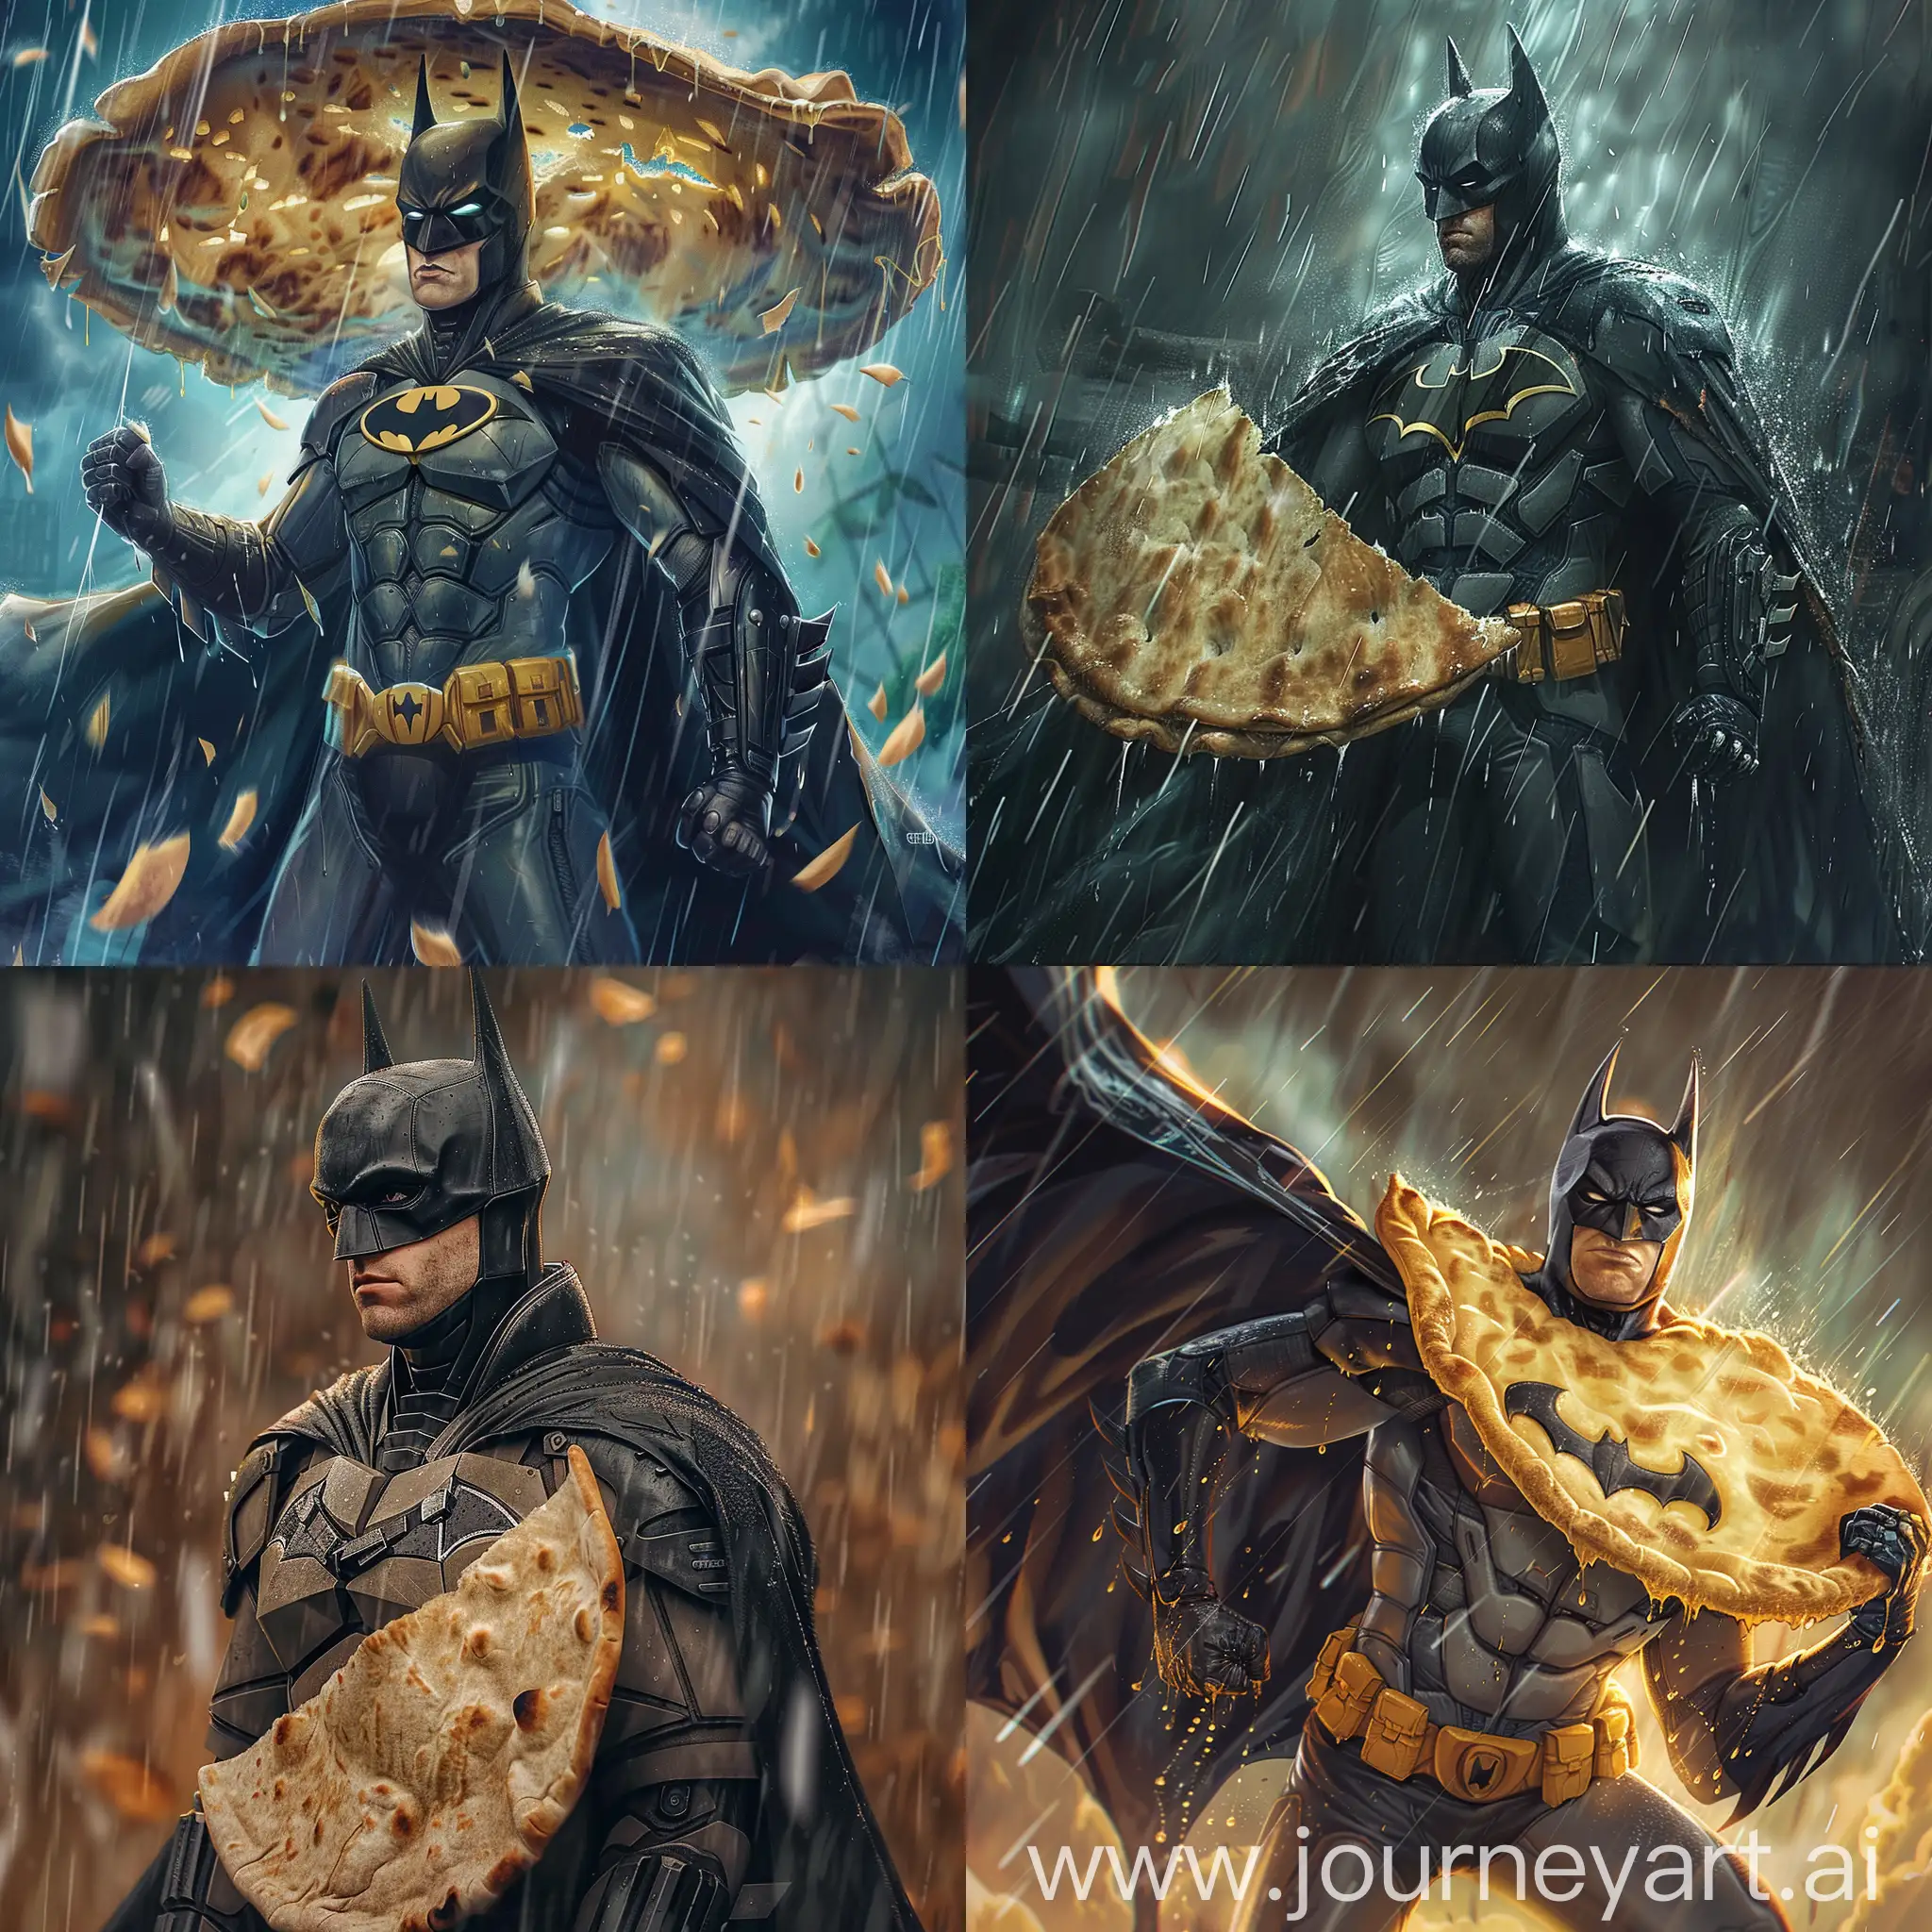 Batman with a pita instead of a cape, saving the world, it's raining